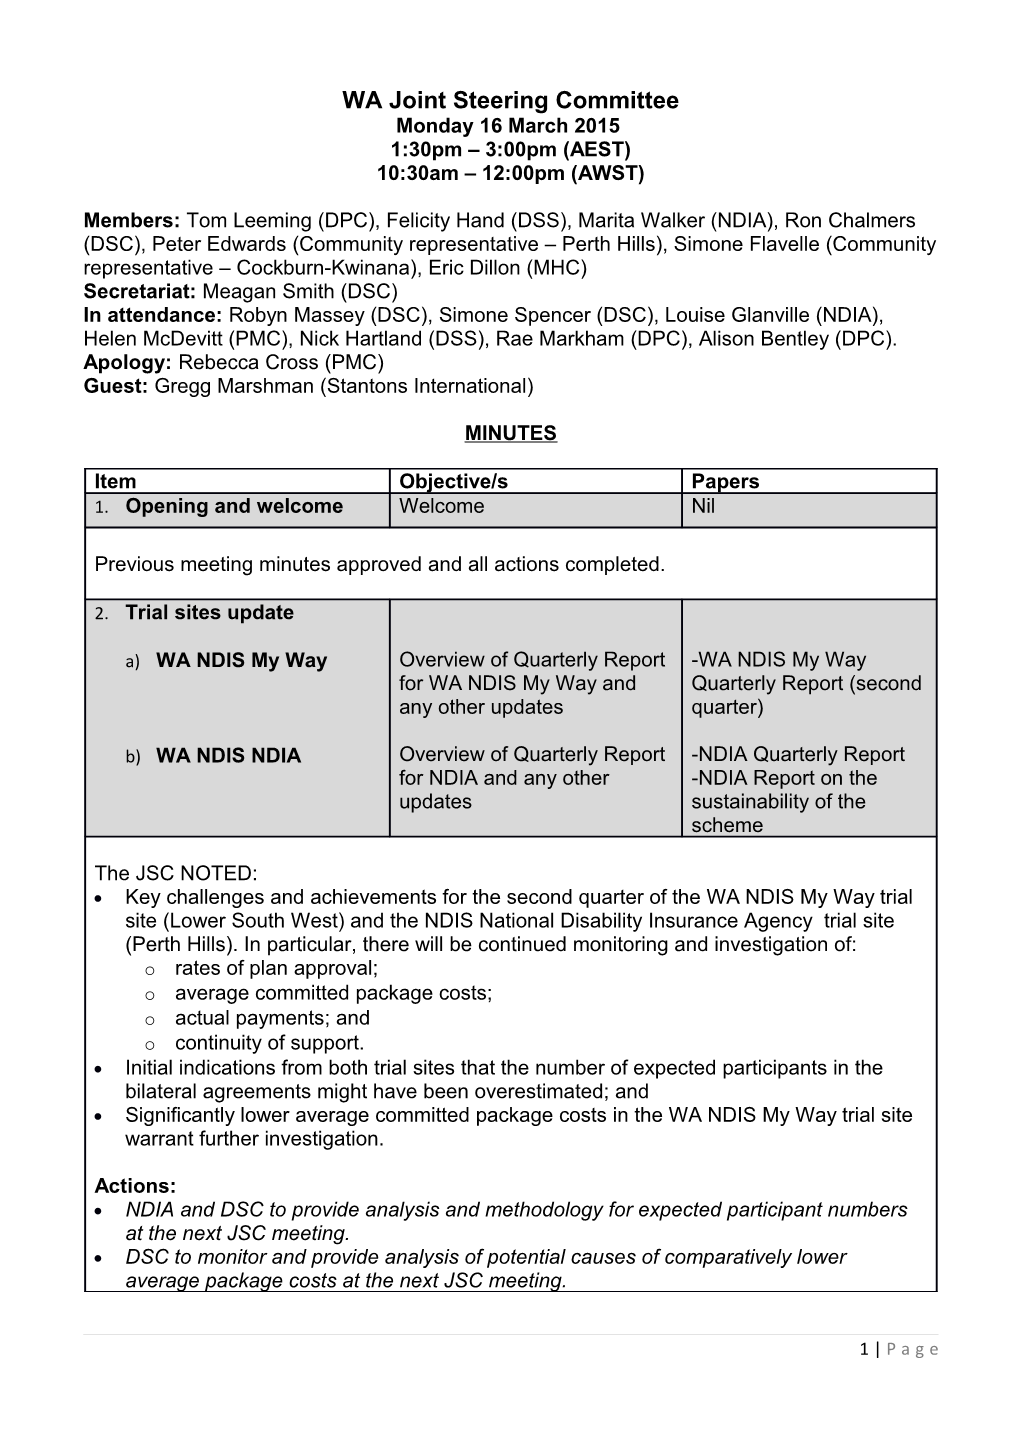 WA Joint Steering Committee Minutes 23 June 2014